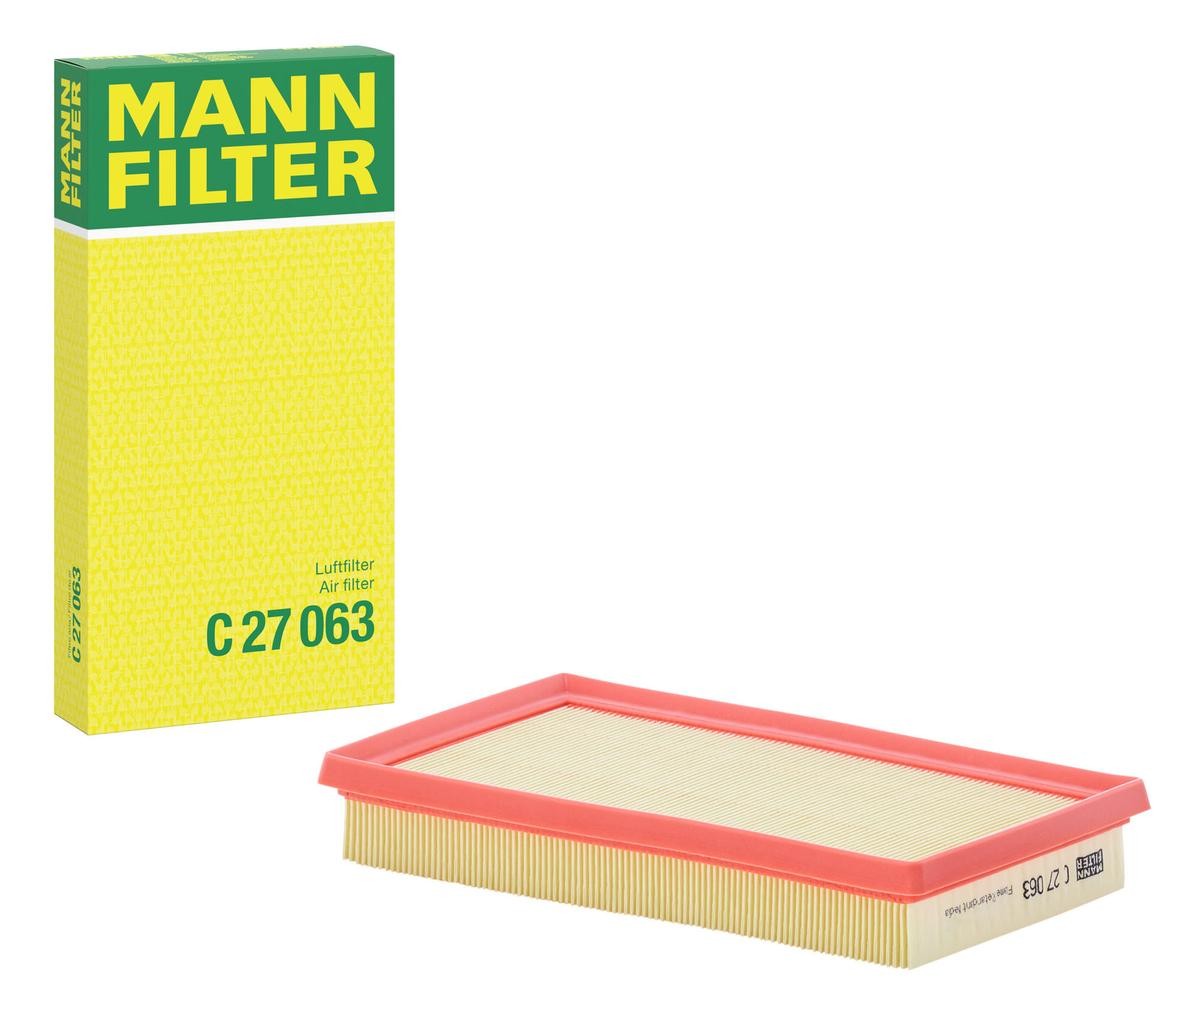 MANN-FILTER C 27 063 Air filter SUZUKI experience and price